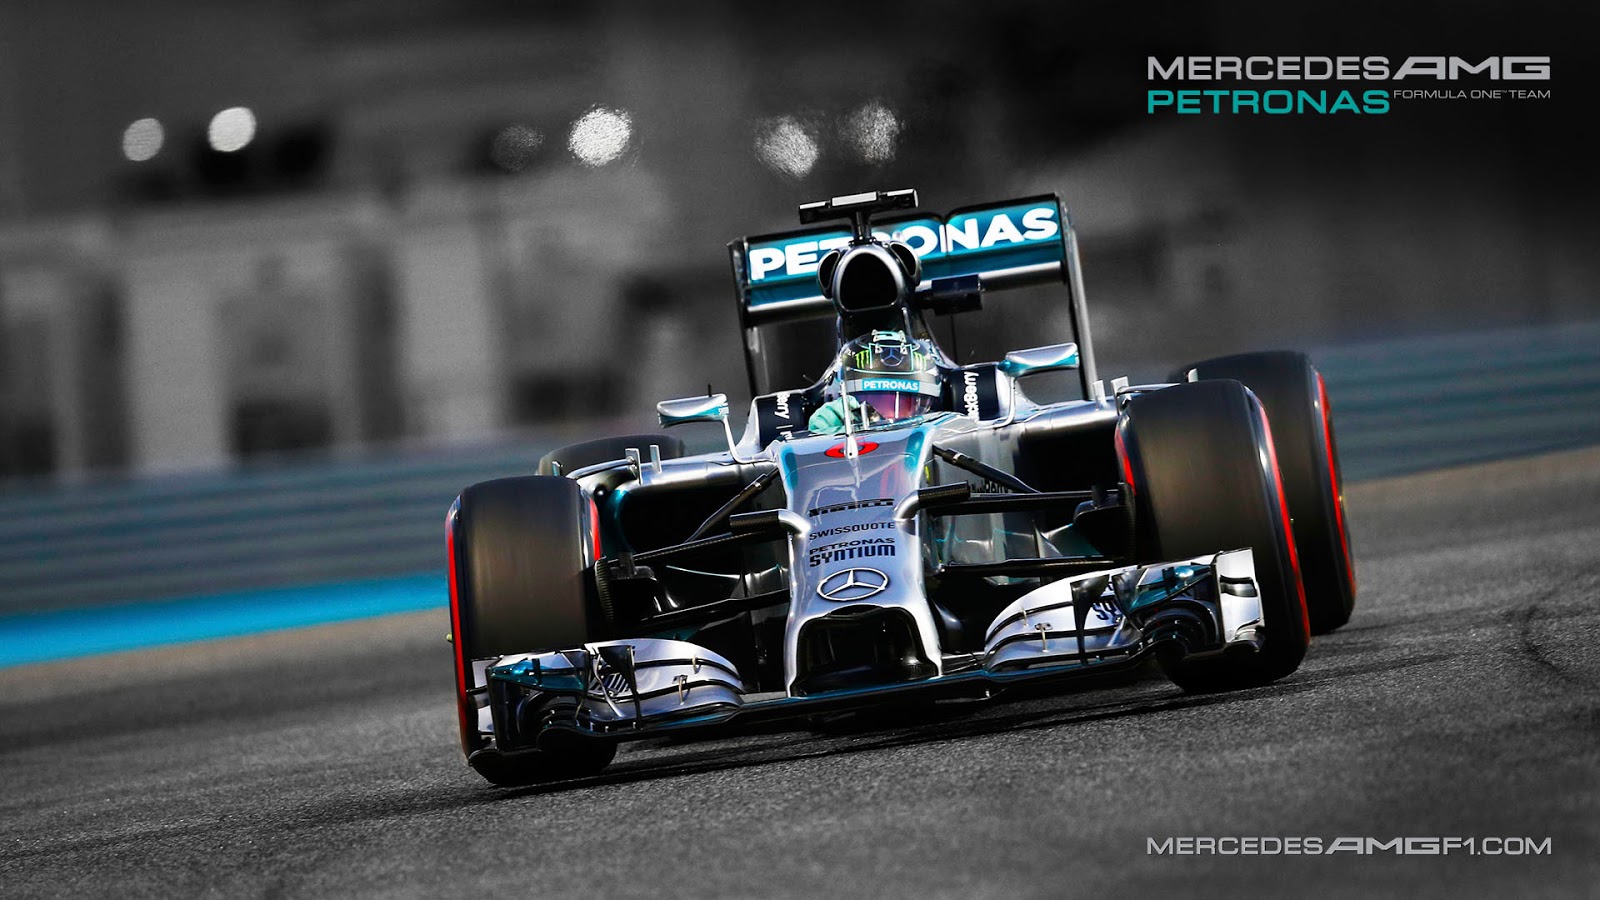 Mercedes AMG Petronas Wallpaperjpg 1600x900